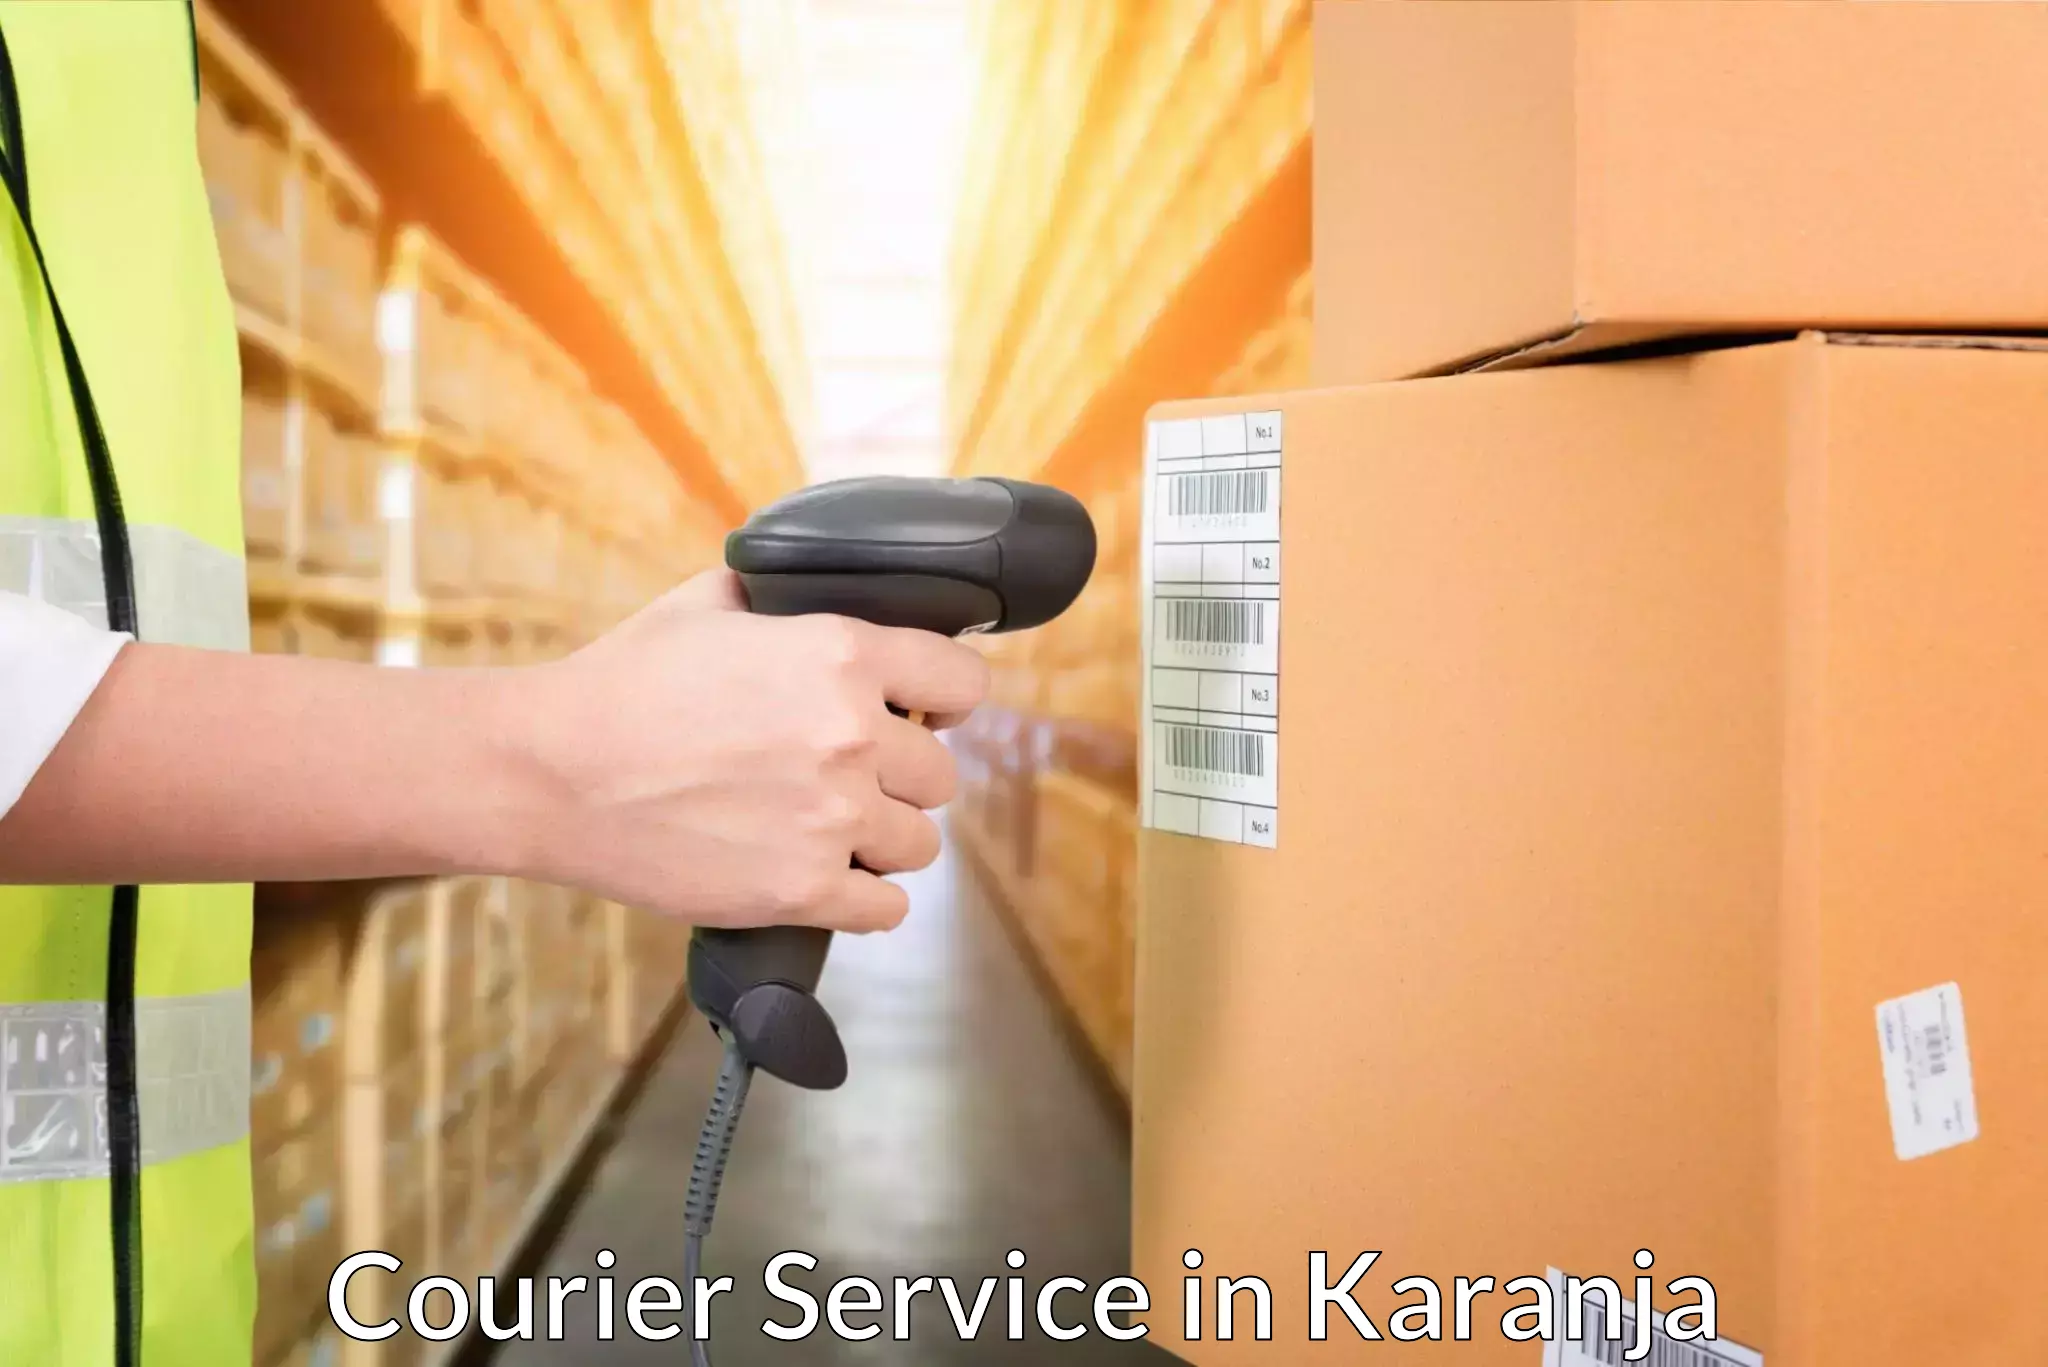 Modern delivery technologies in Karanja